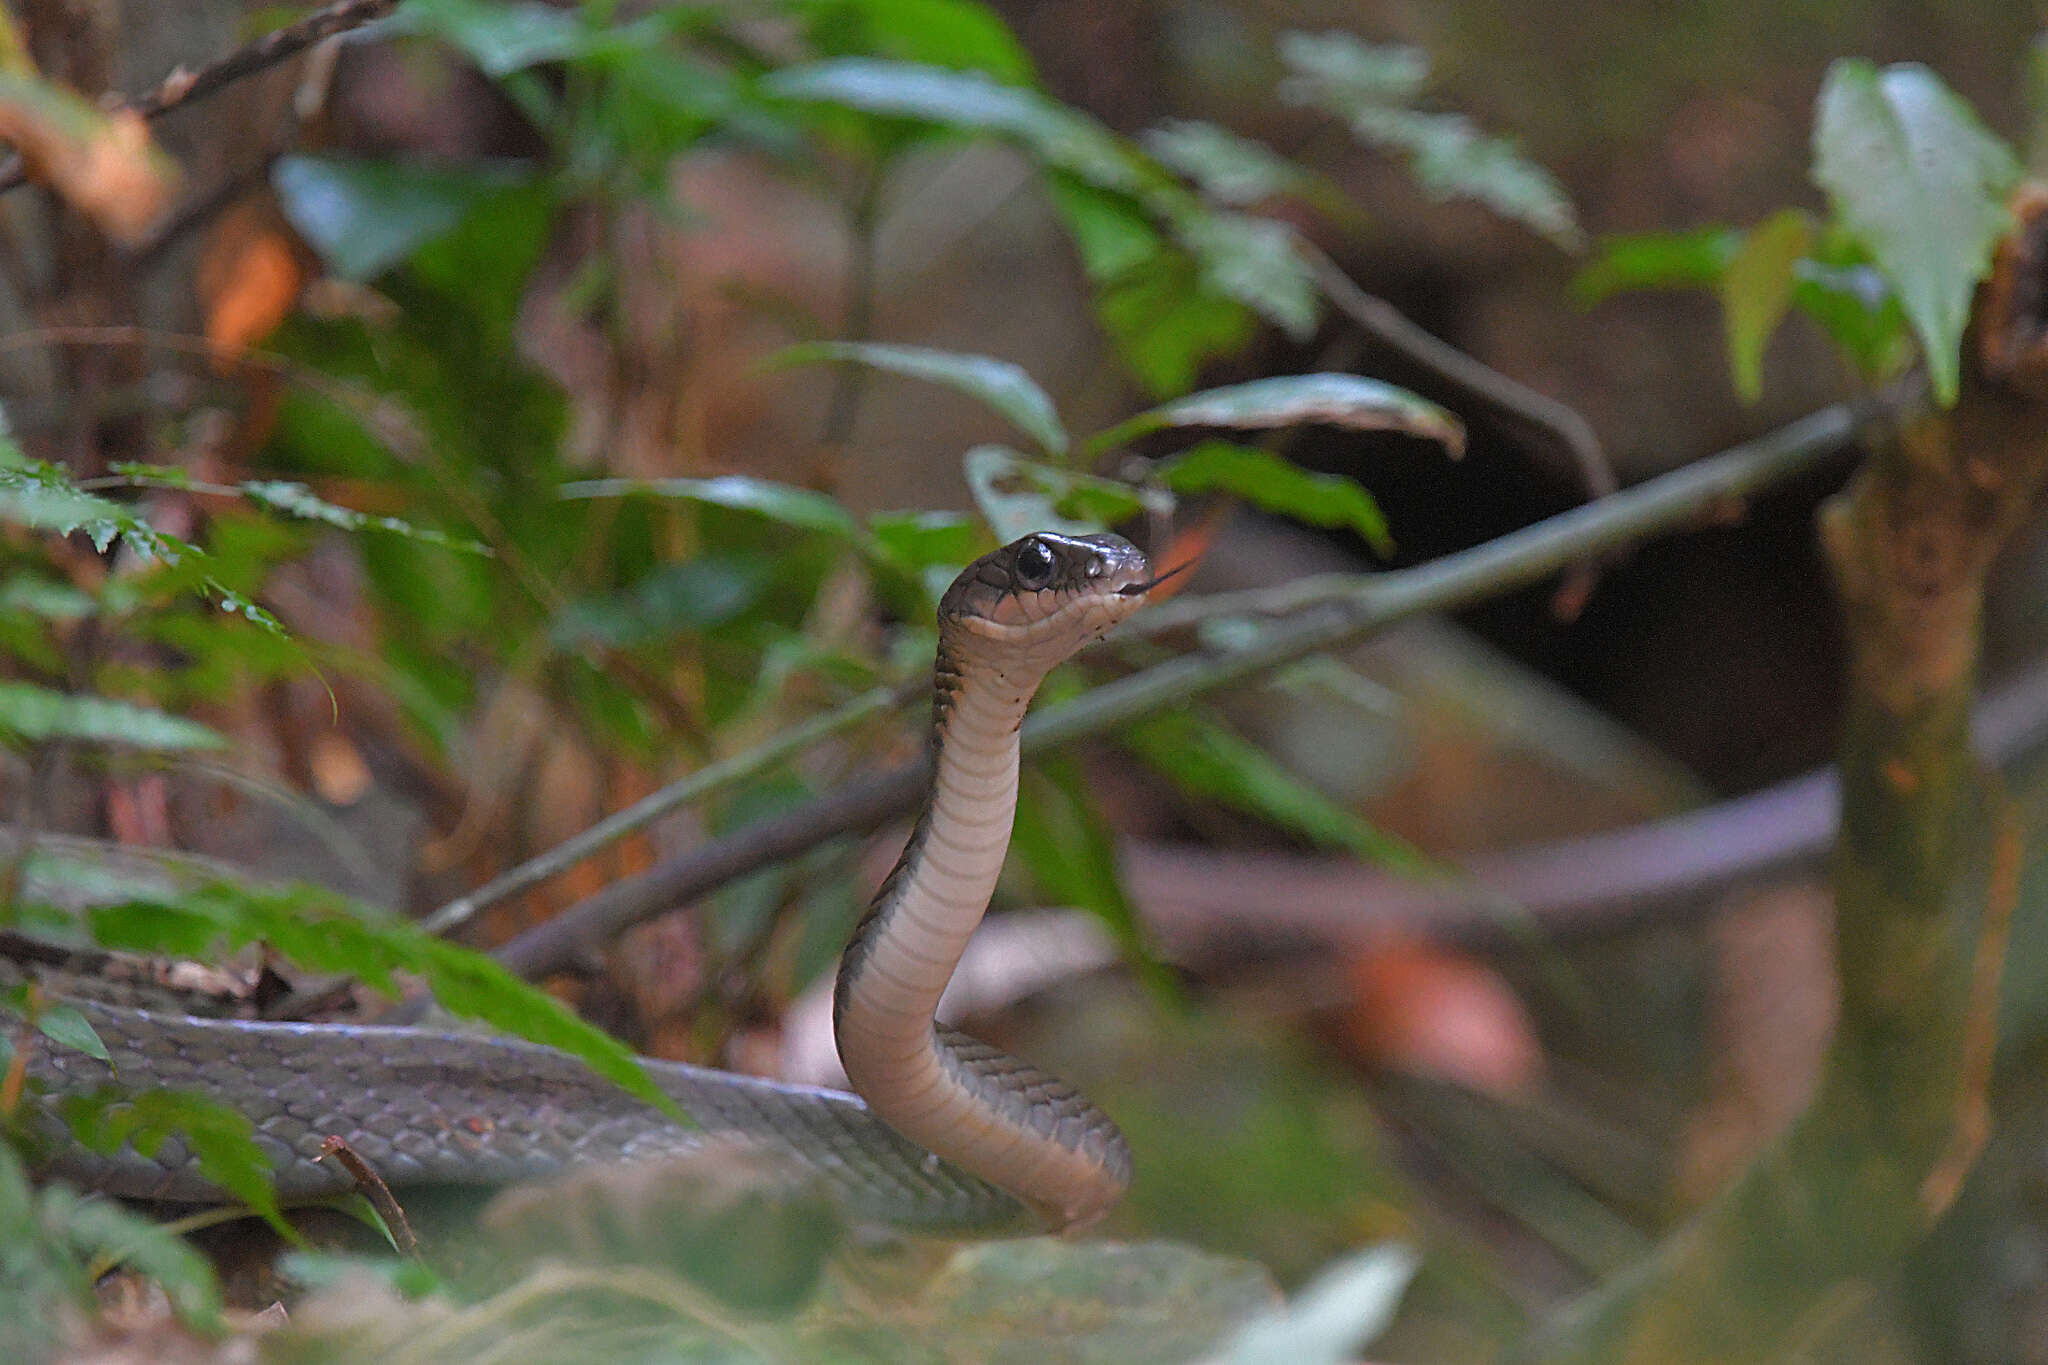 Image of White-bellied Rat Snake